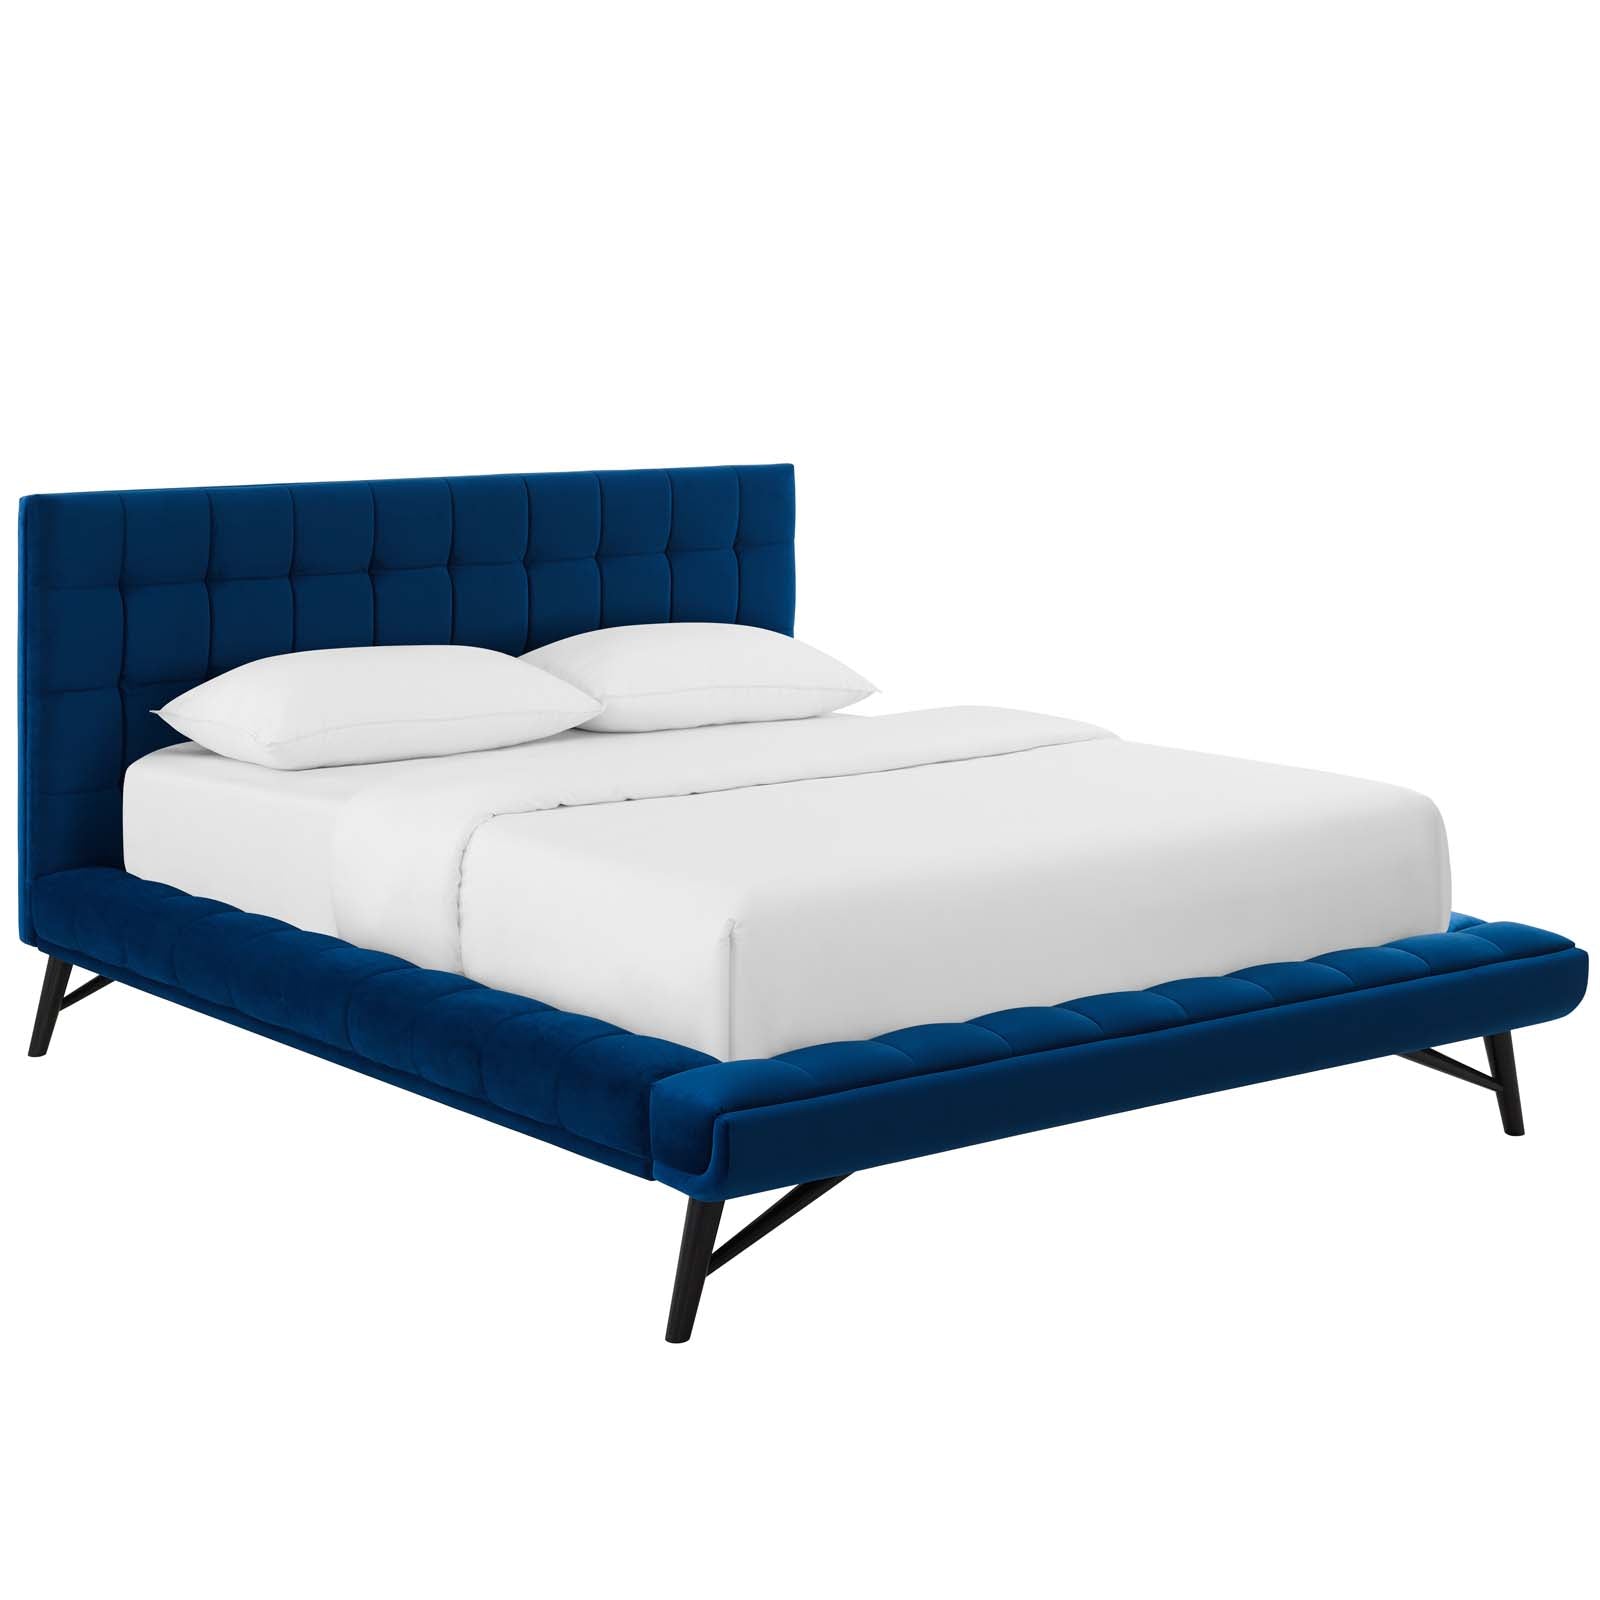 Modway Beds - Julia Biscuit Tufted Queen Bed Navy